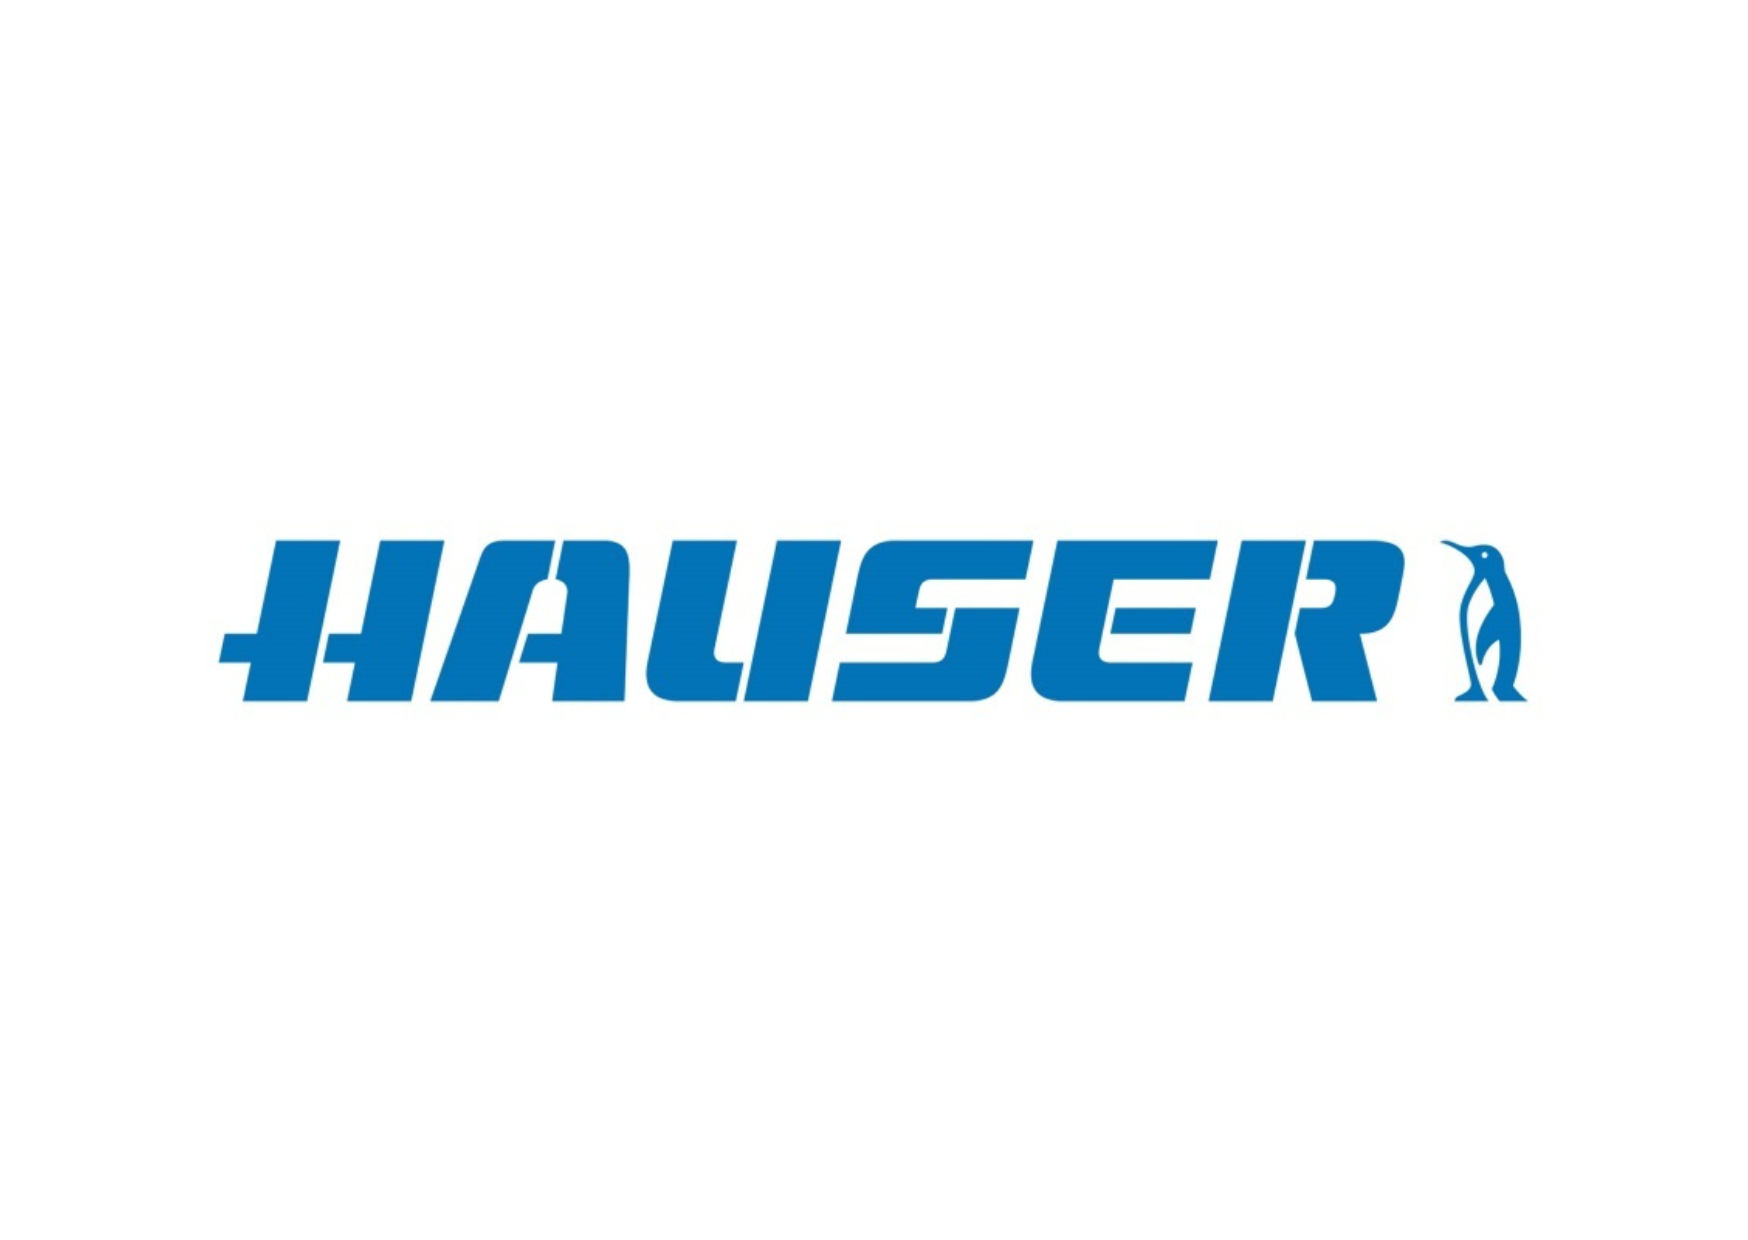 hauser_logo